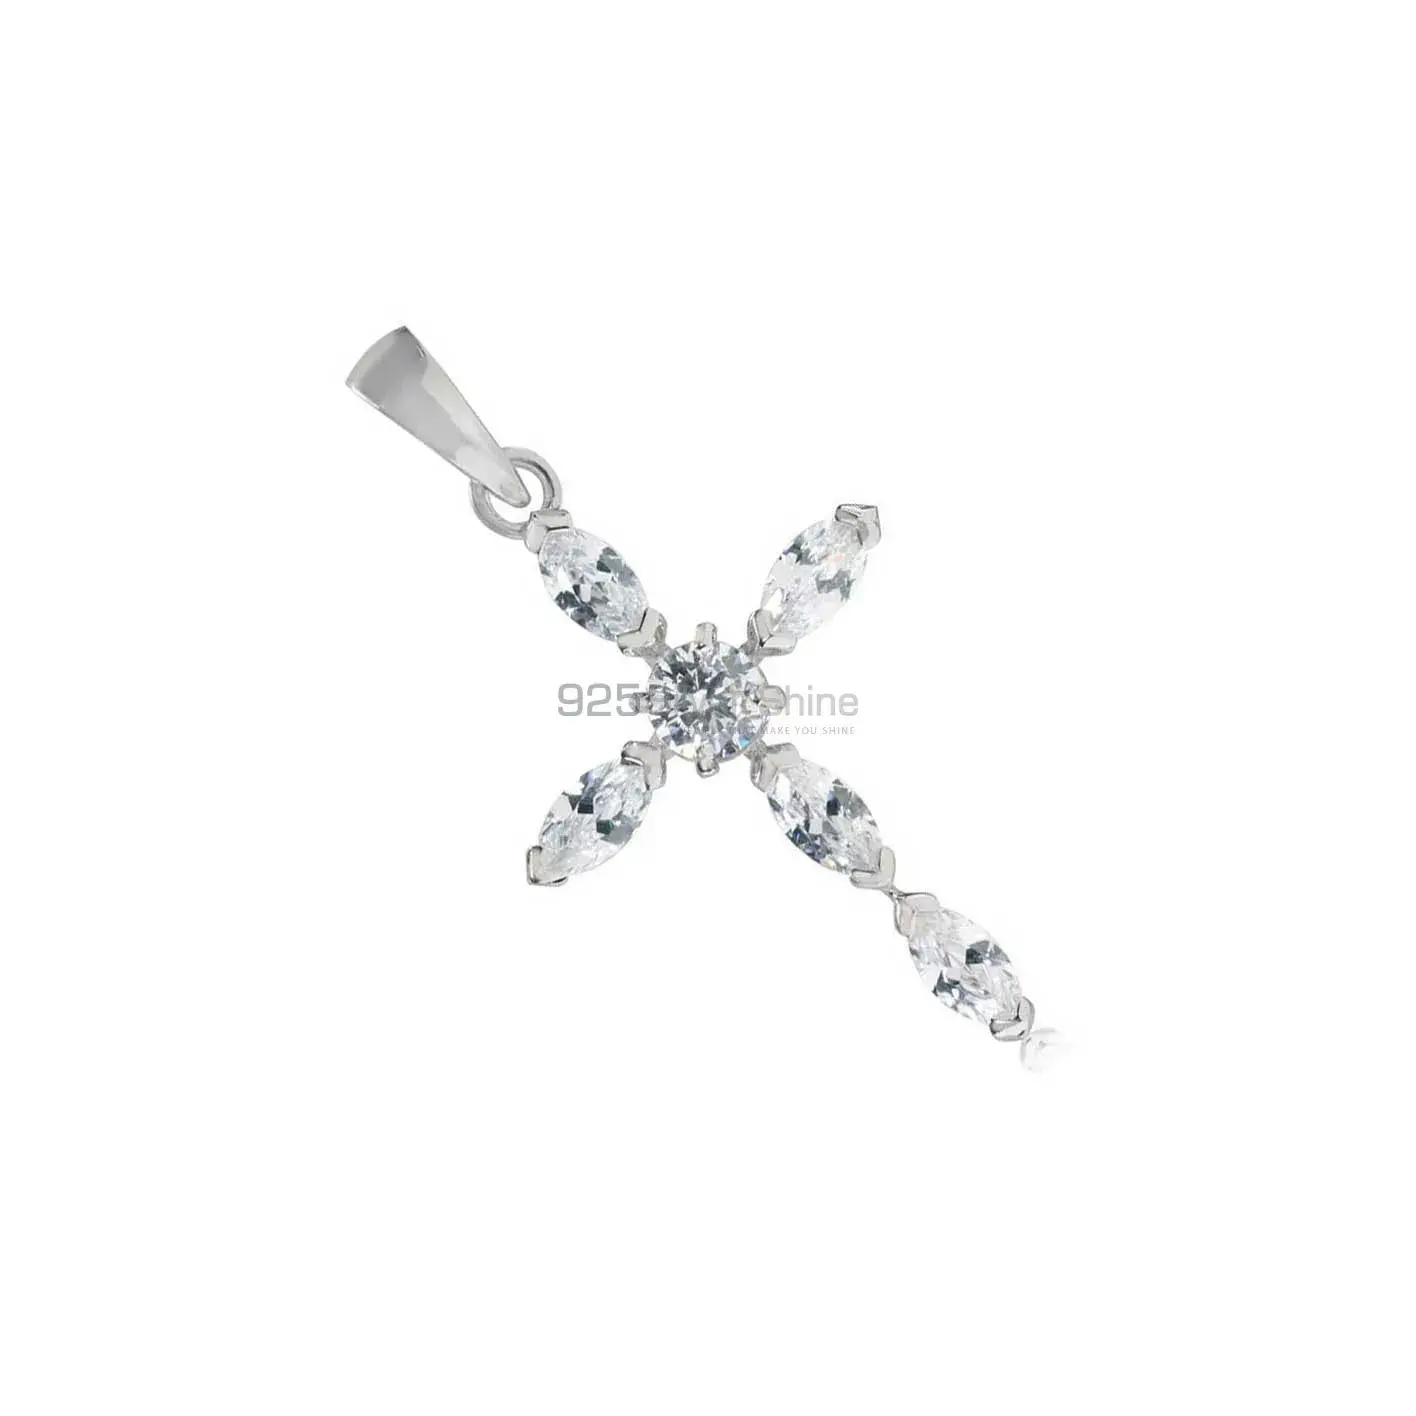 Best Quality 925 Fine Silver Pendants Suppliers In White Topaz Gemstone Jewelry 925SP04_1